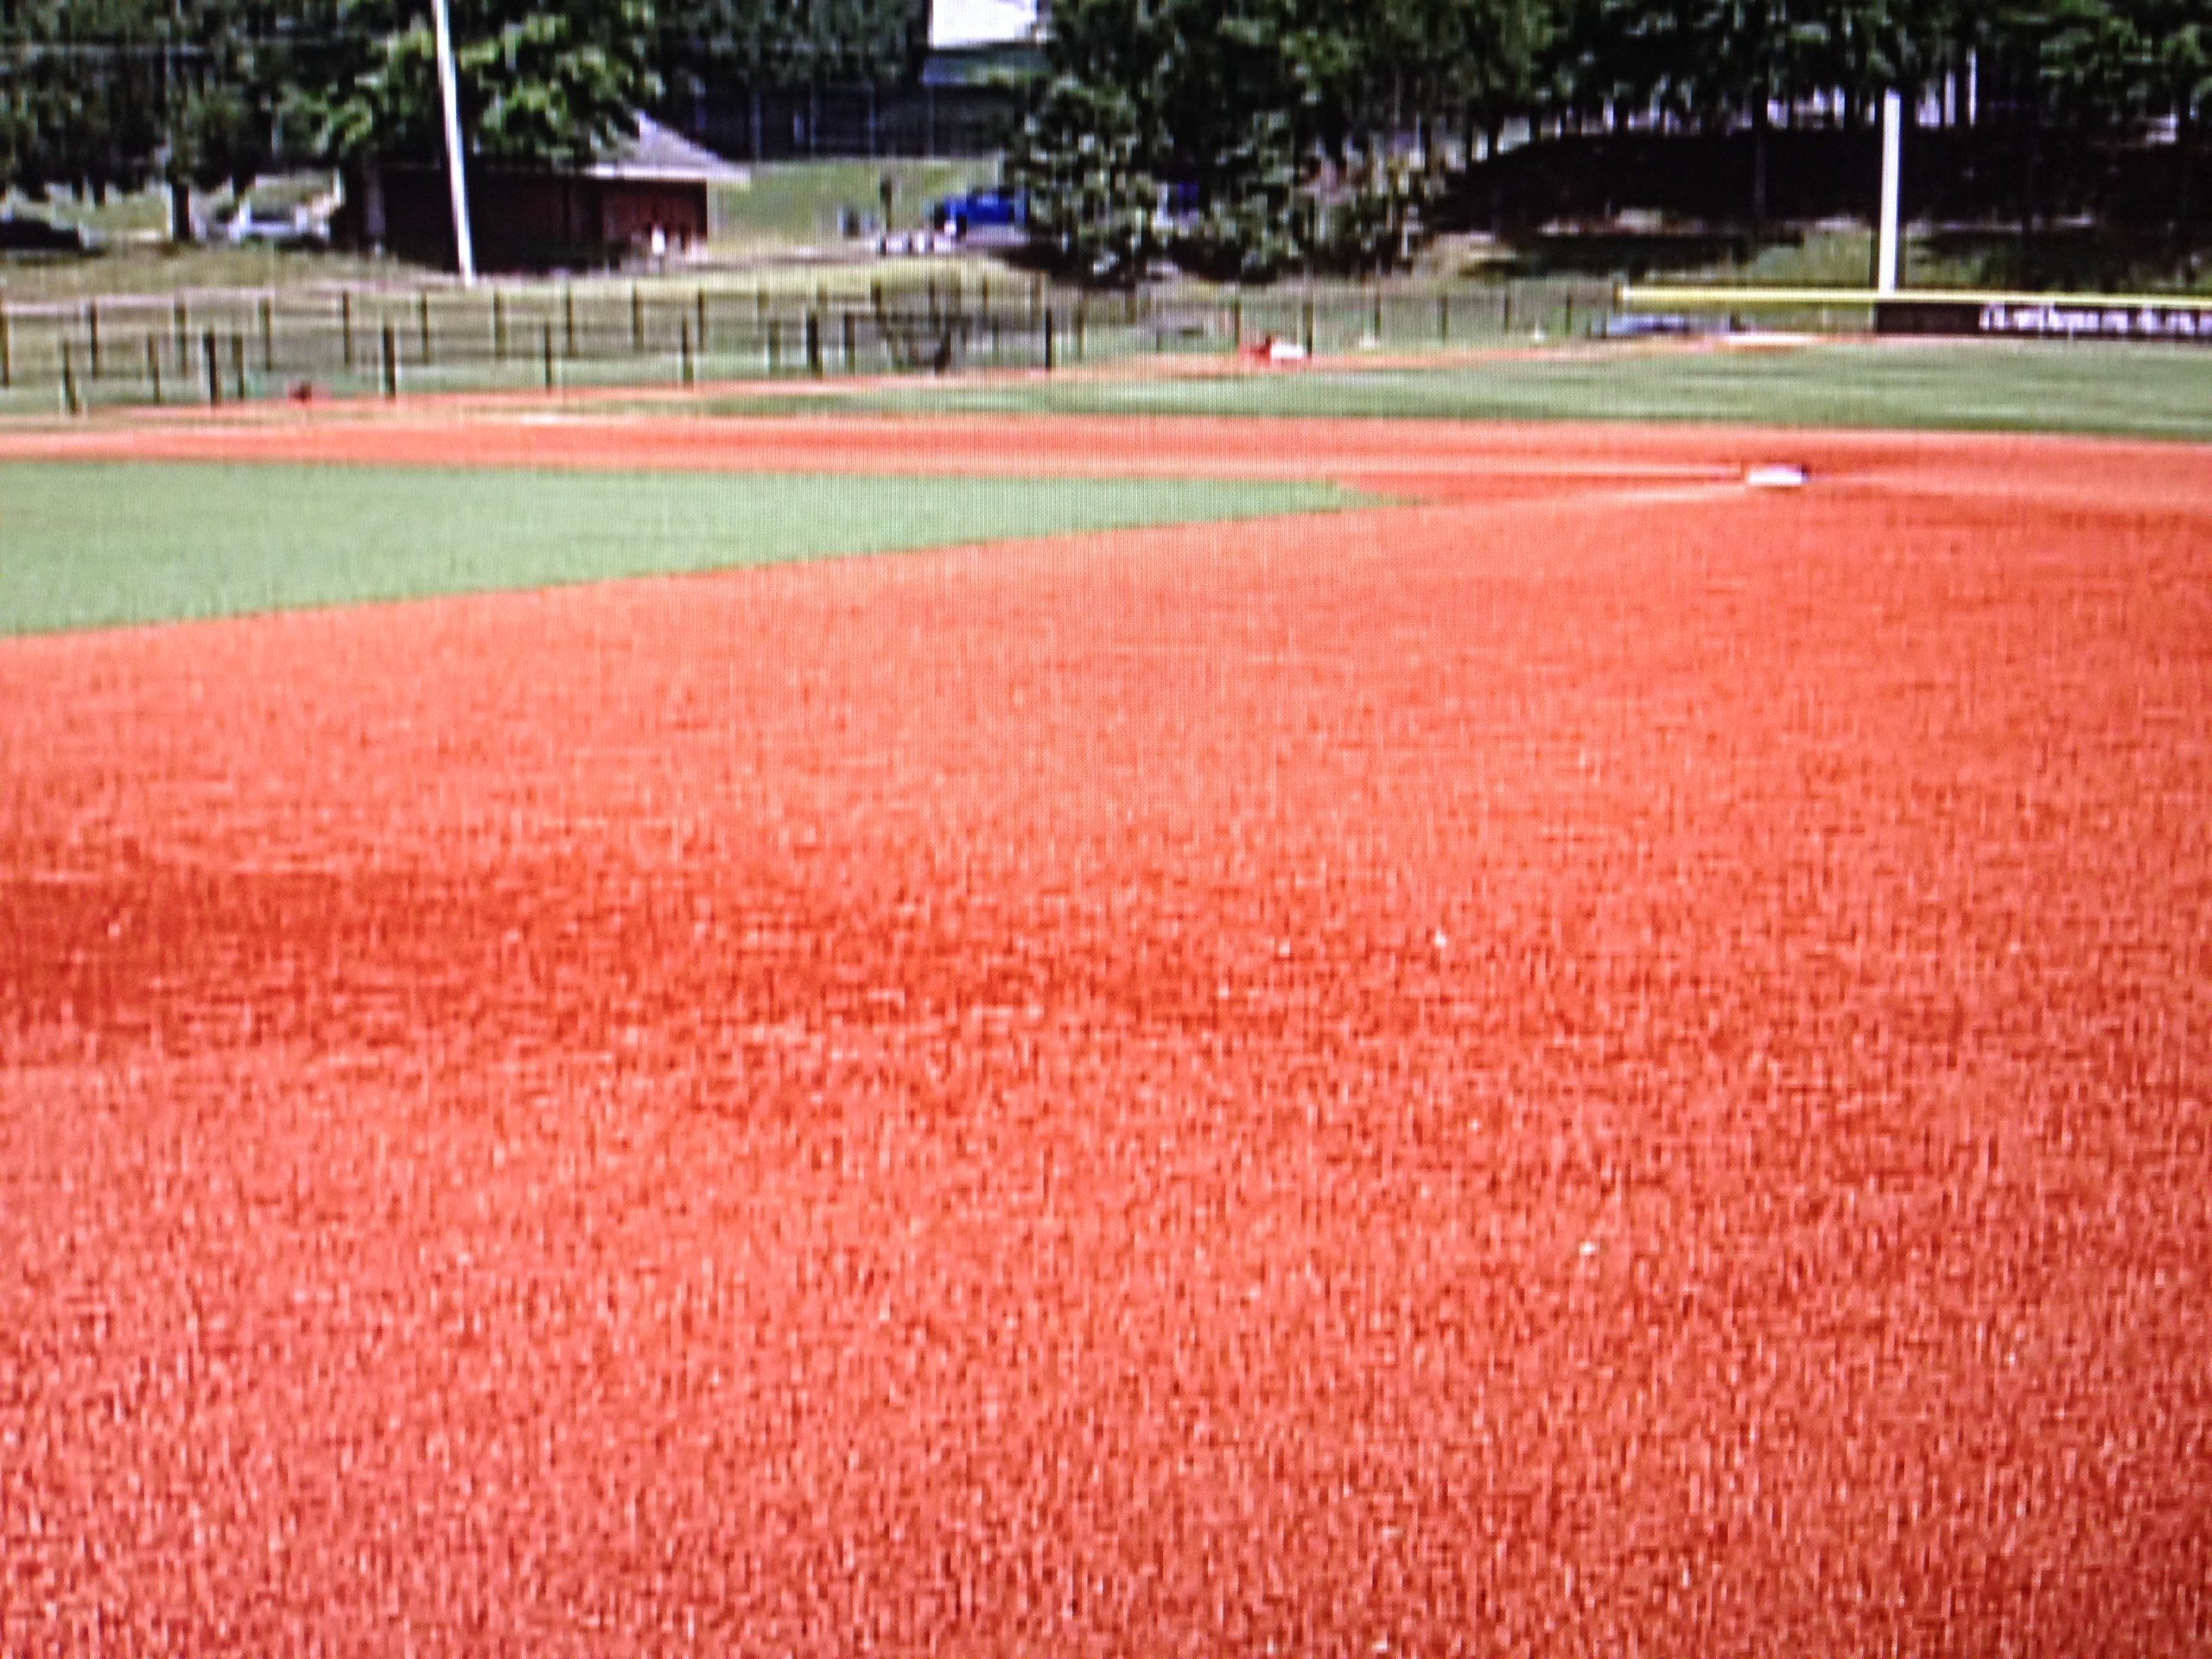 McCallie Baseball Field Includes Artificial Dirt - WDEF